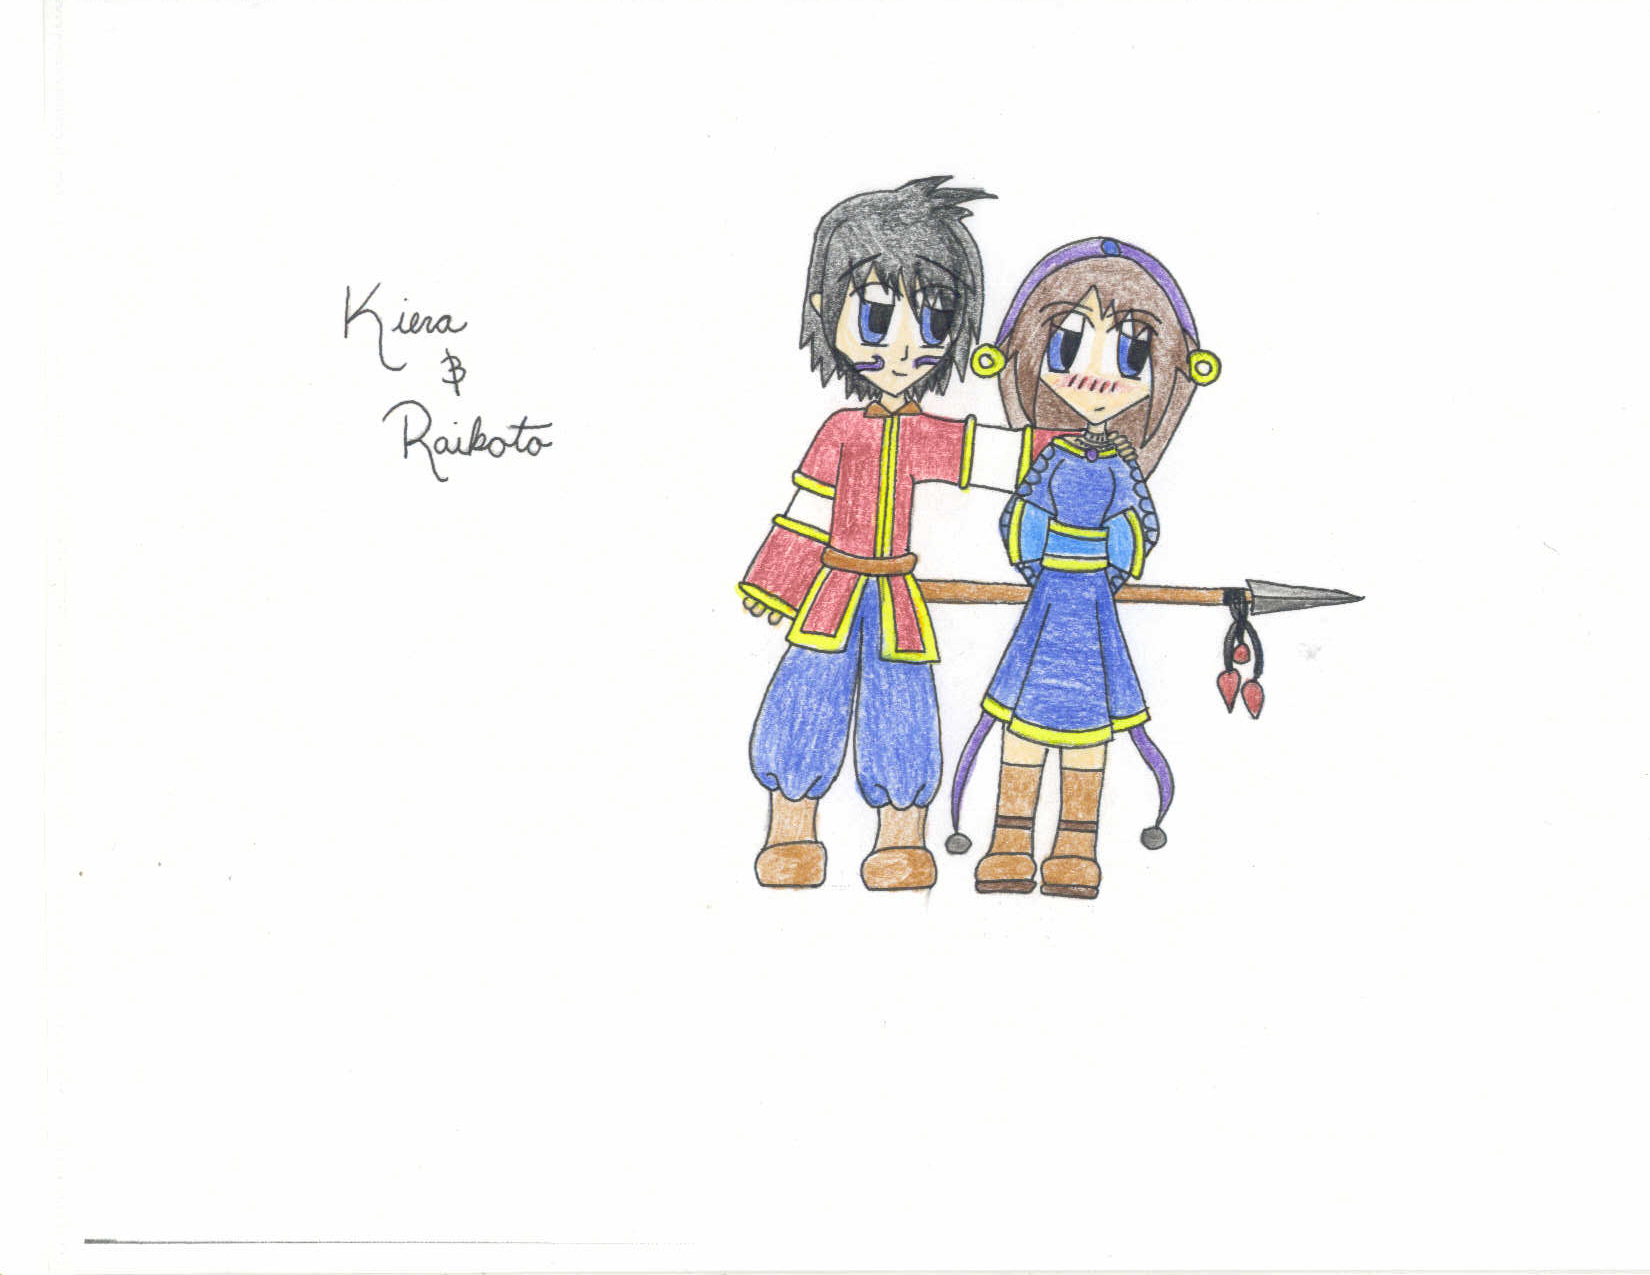 Kiera and Raikoto by Ziya